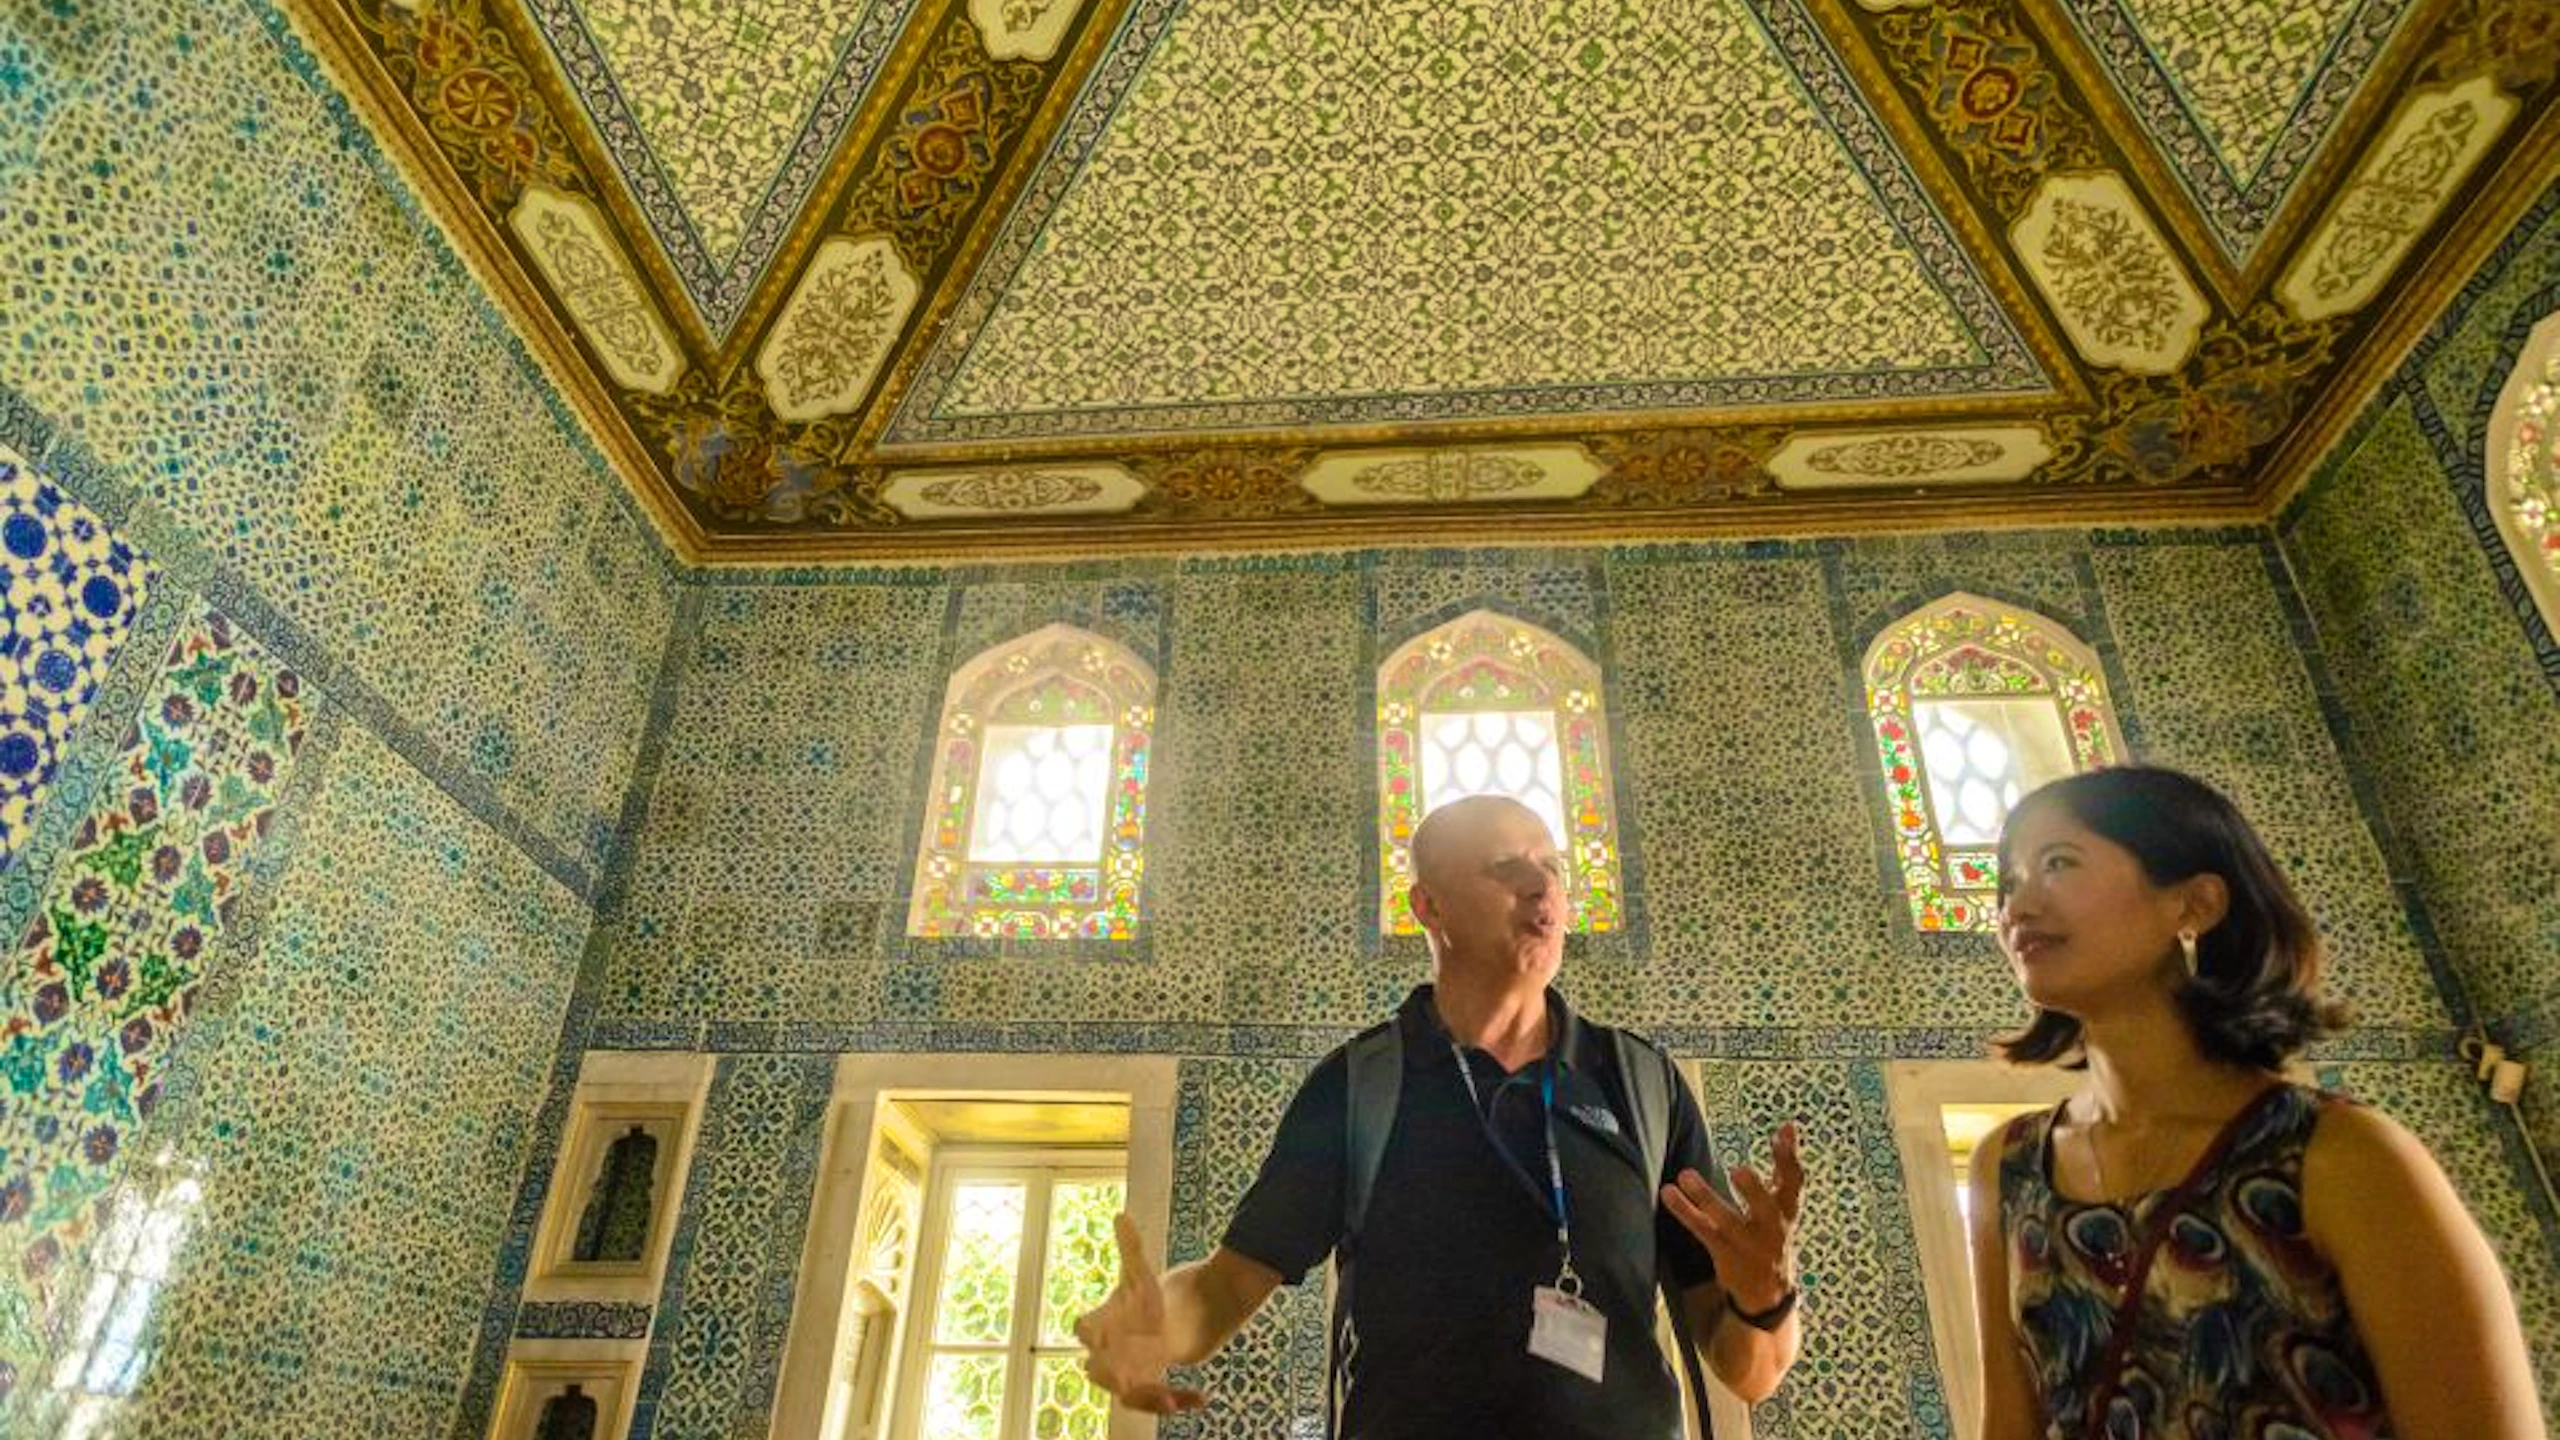 Harem Topkapi Palace Tour with a Historian Guide Price